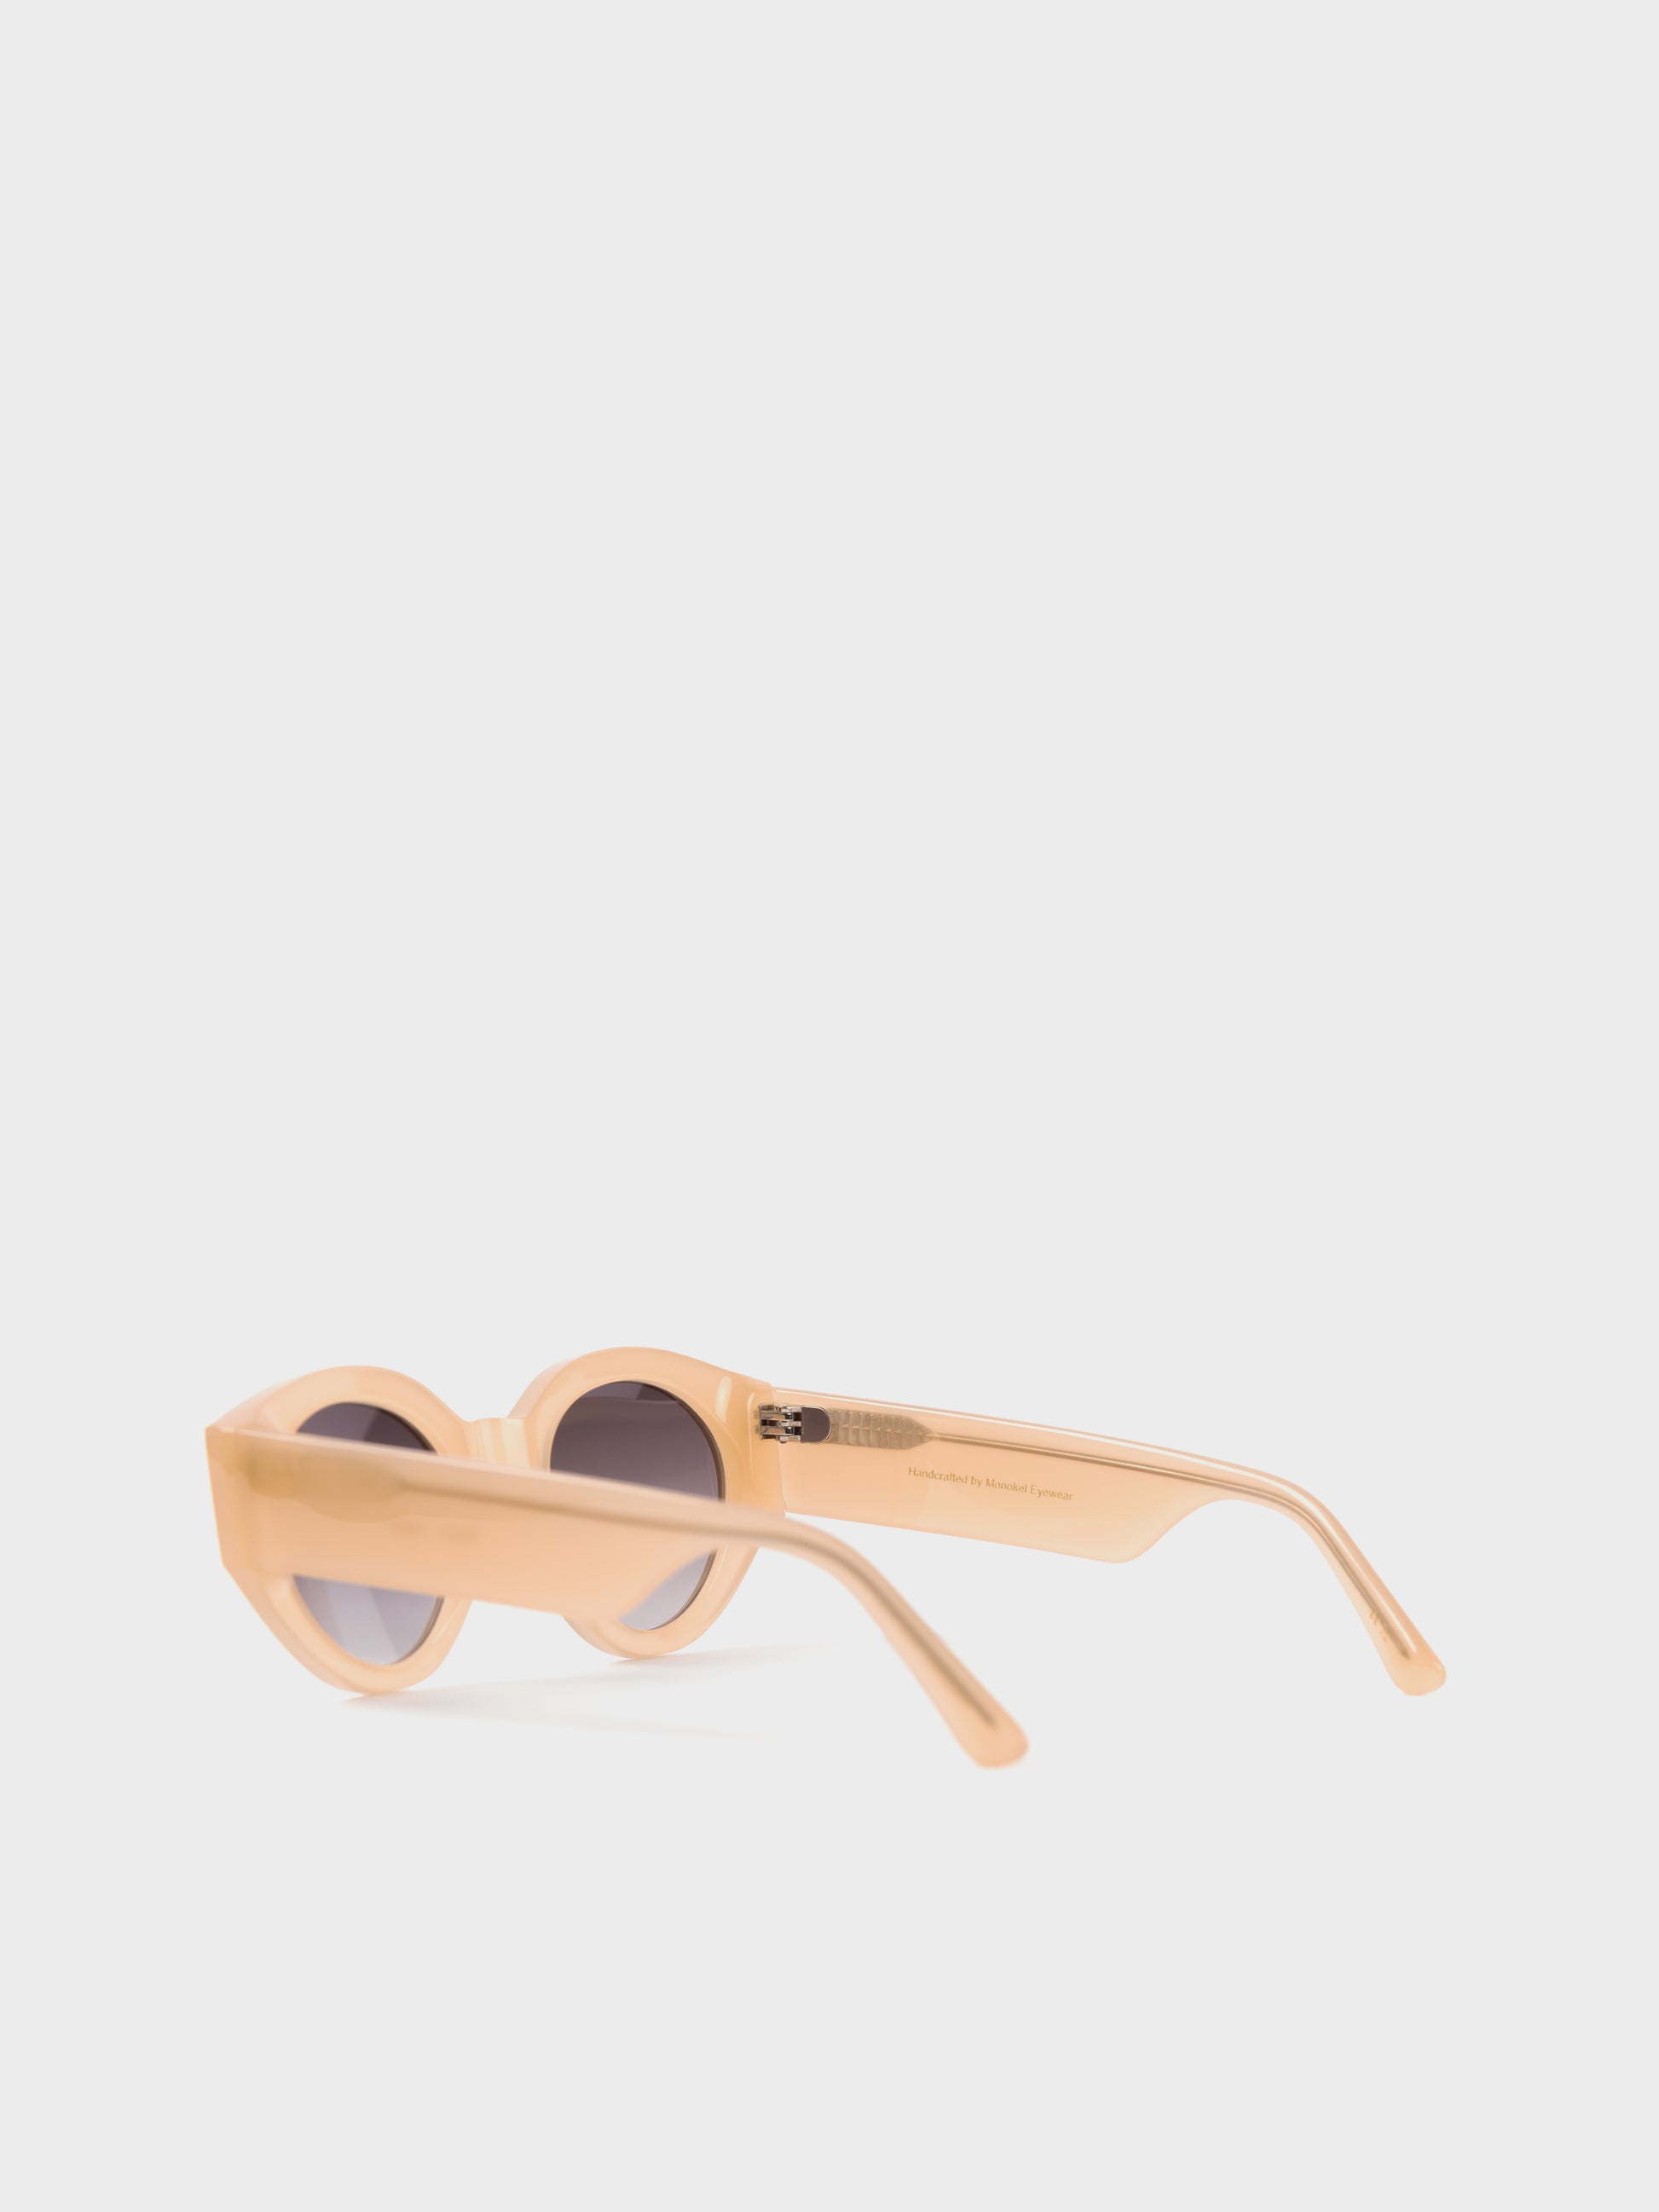 Monokel Sunglasses - Polly Sand